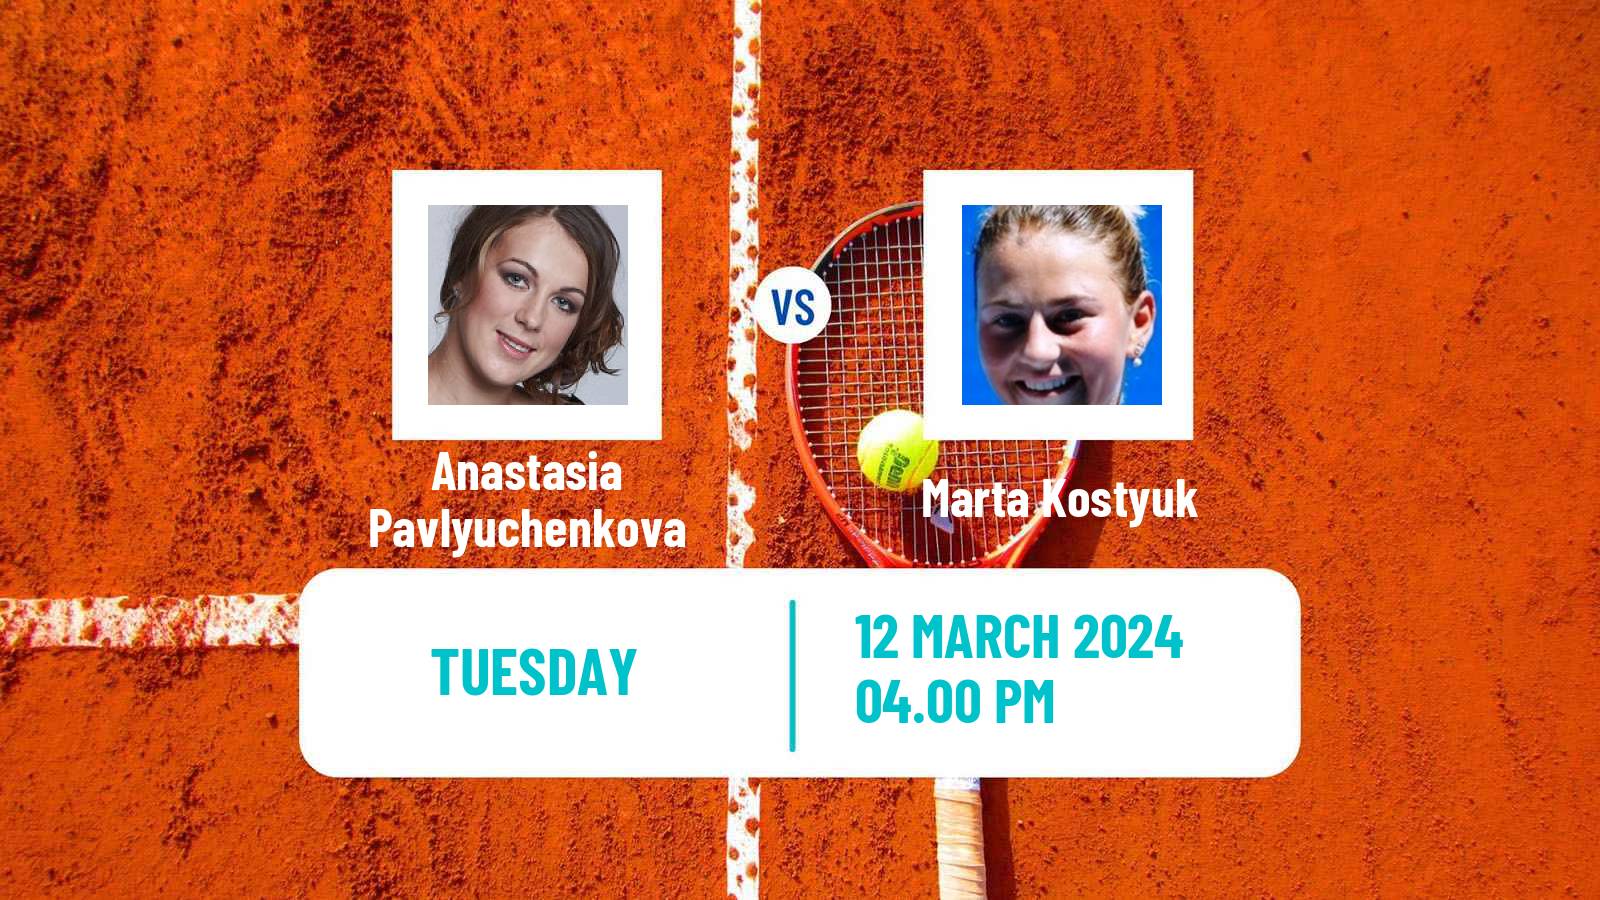 Tennis WTA Indian Wells Anastasia Pavlyuchenkova - Marta Kostyuk